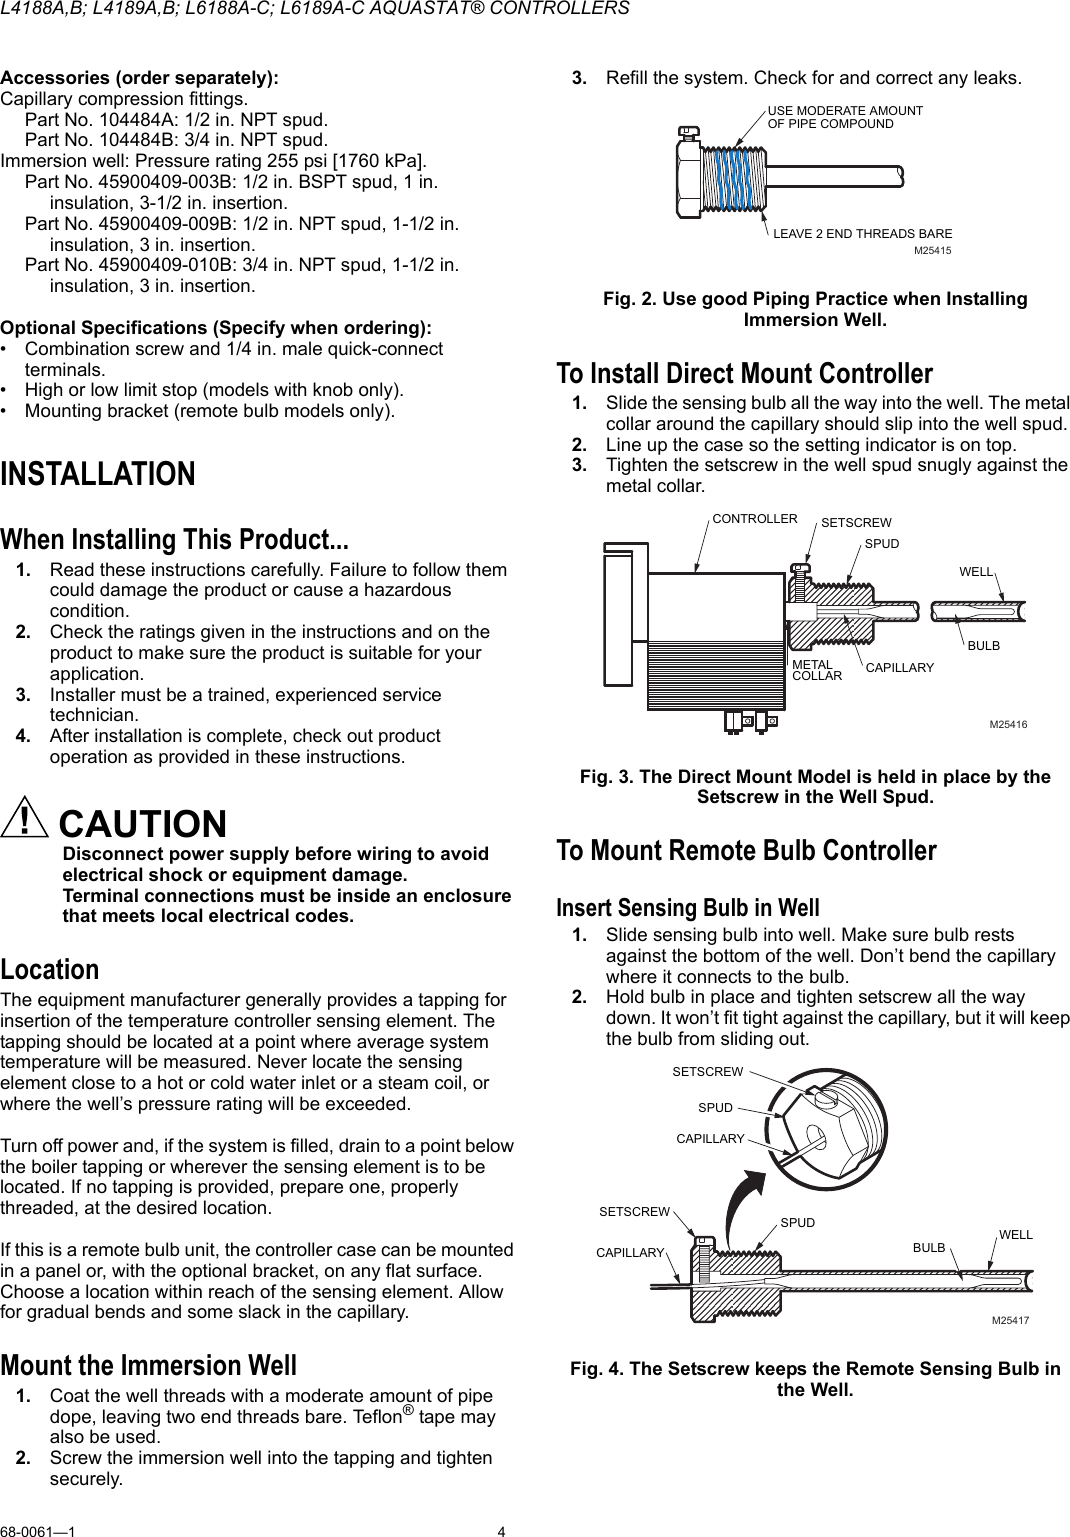 Page 4 of 8 - Honeywell Honeywell-Aquastat-L6188A-C-Users-Manual- 68-0061-1 - L4188A,B; L4189A,B; L6188A-C; L6189A-C Aquastat® Controllers  Honeywell-aquastat-l6188a-c-users-manual